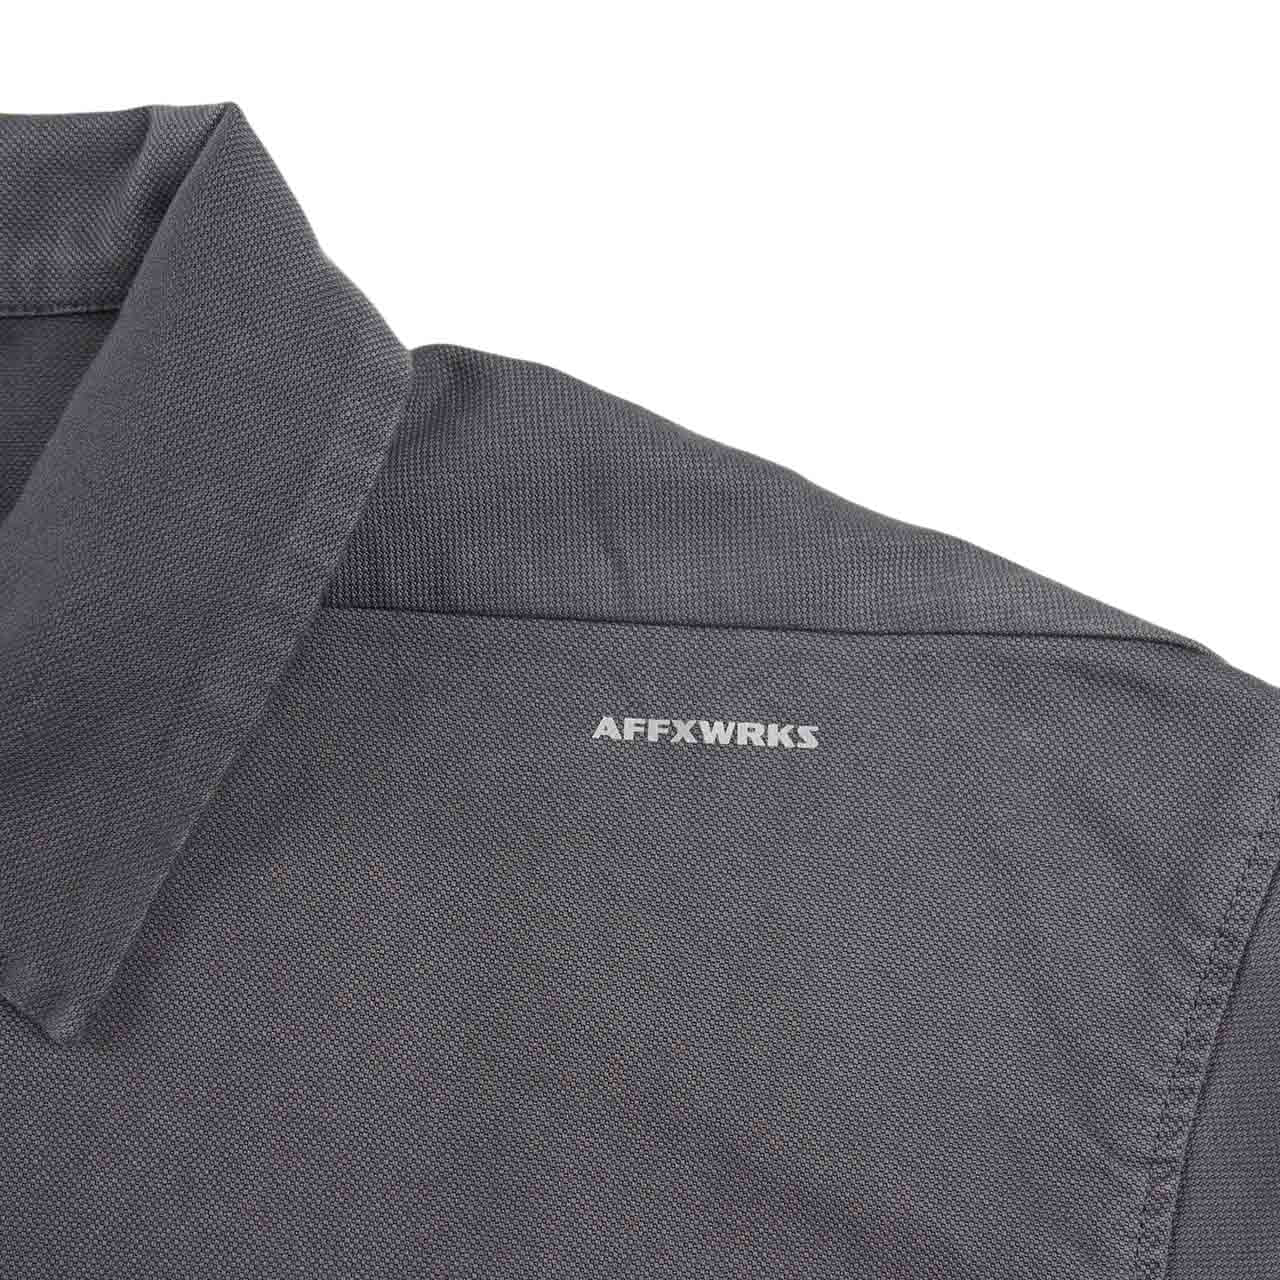 affxwrks wrks jacket (grau)